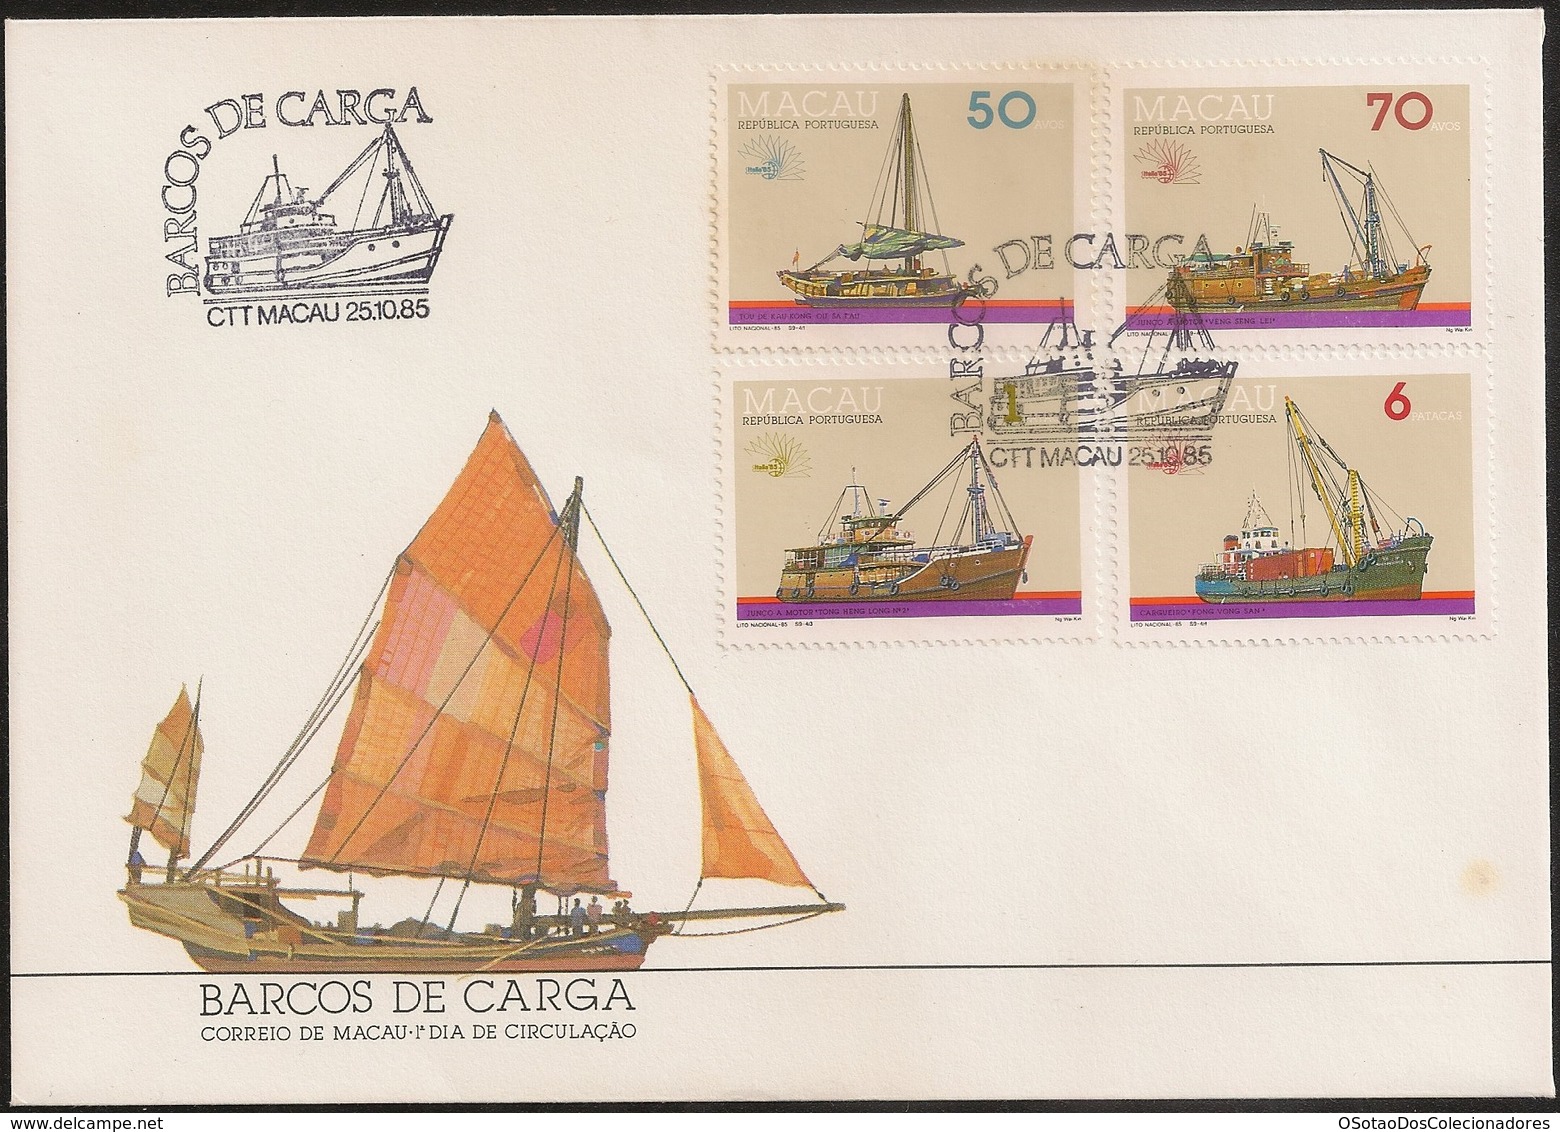 Macau Macao Chine FDC 1985 - Meios Transporte Tradicionais Barcos Carga - Stamp Exhibition Italia Cargo Boats - MNH/Neuf - FDC